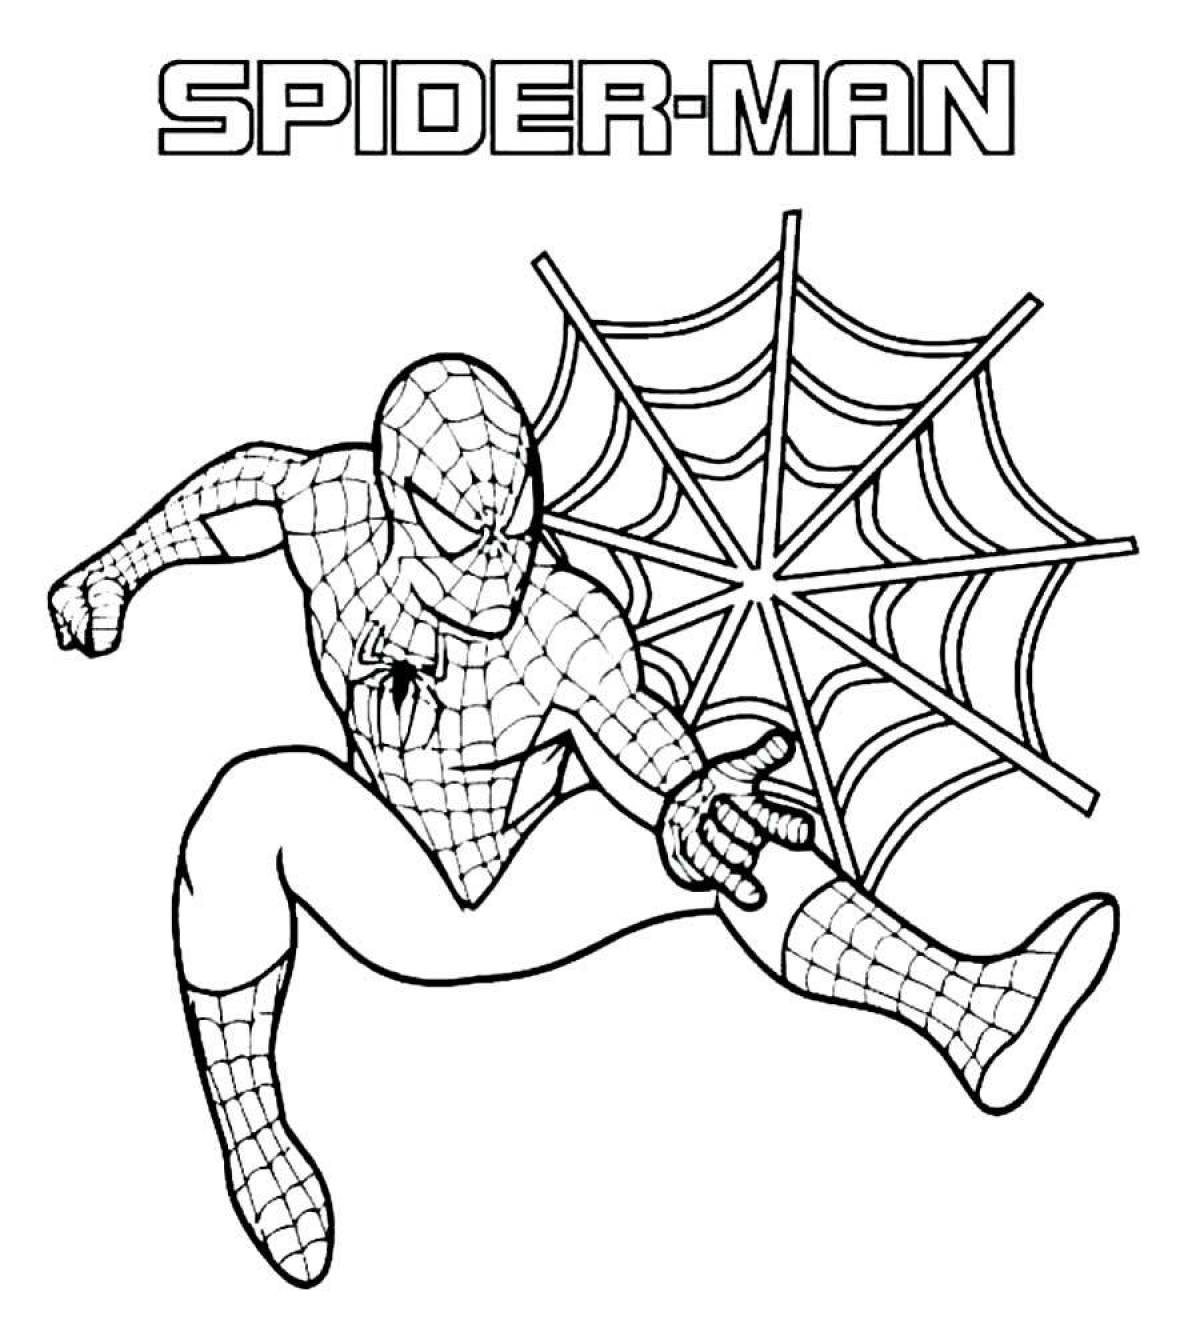 Spider-man impressive coloring book